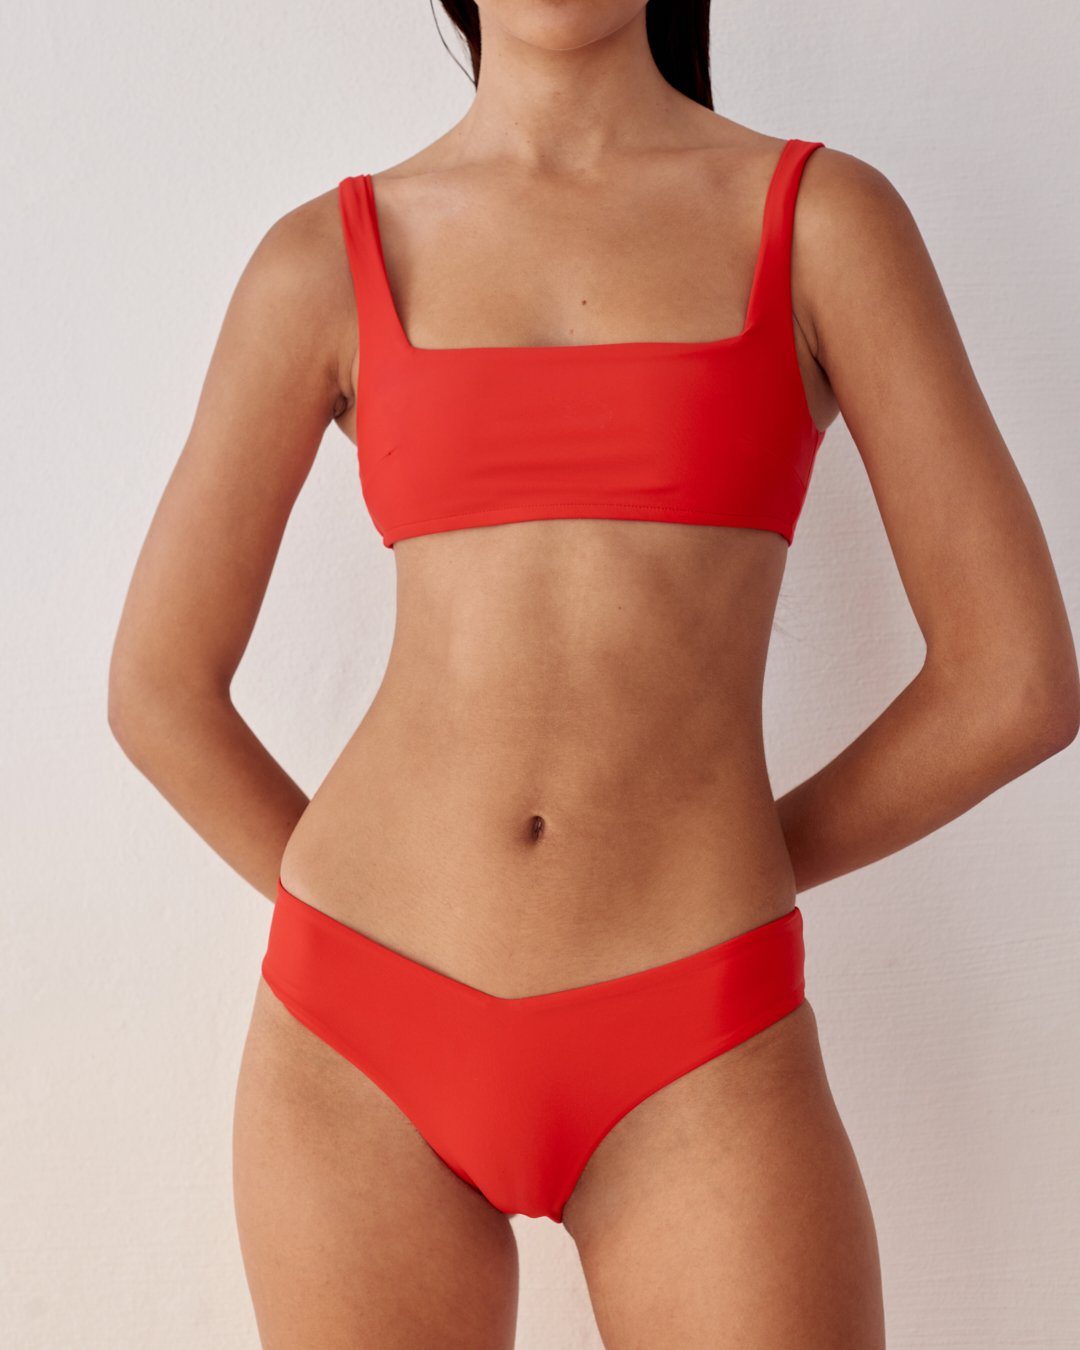 The V Red Leather Bikini Bottom